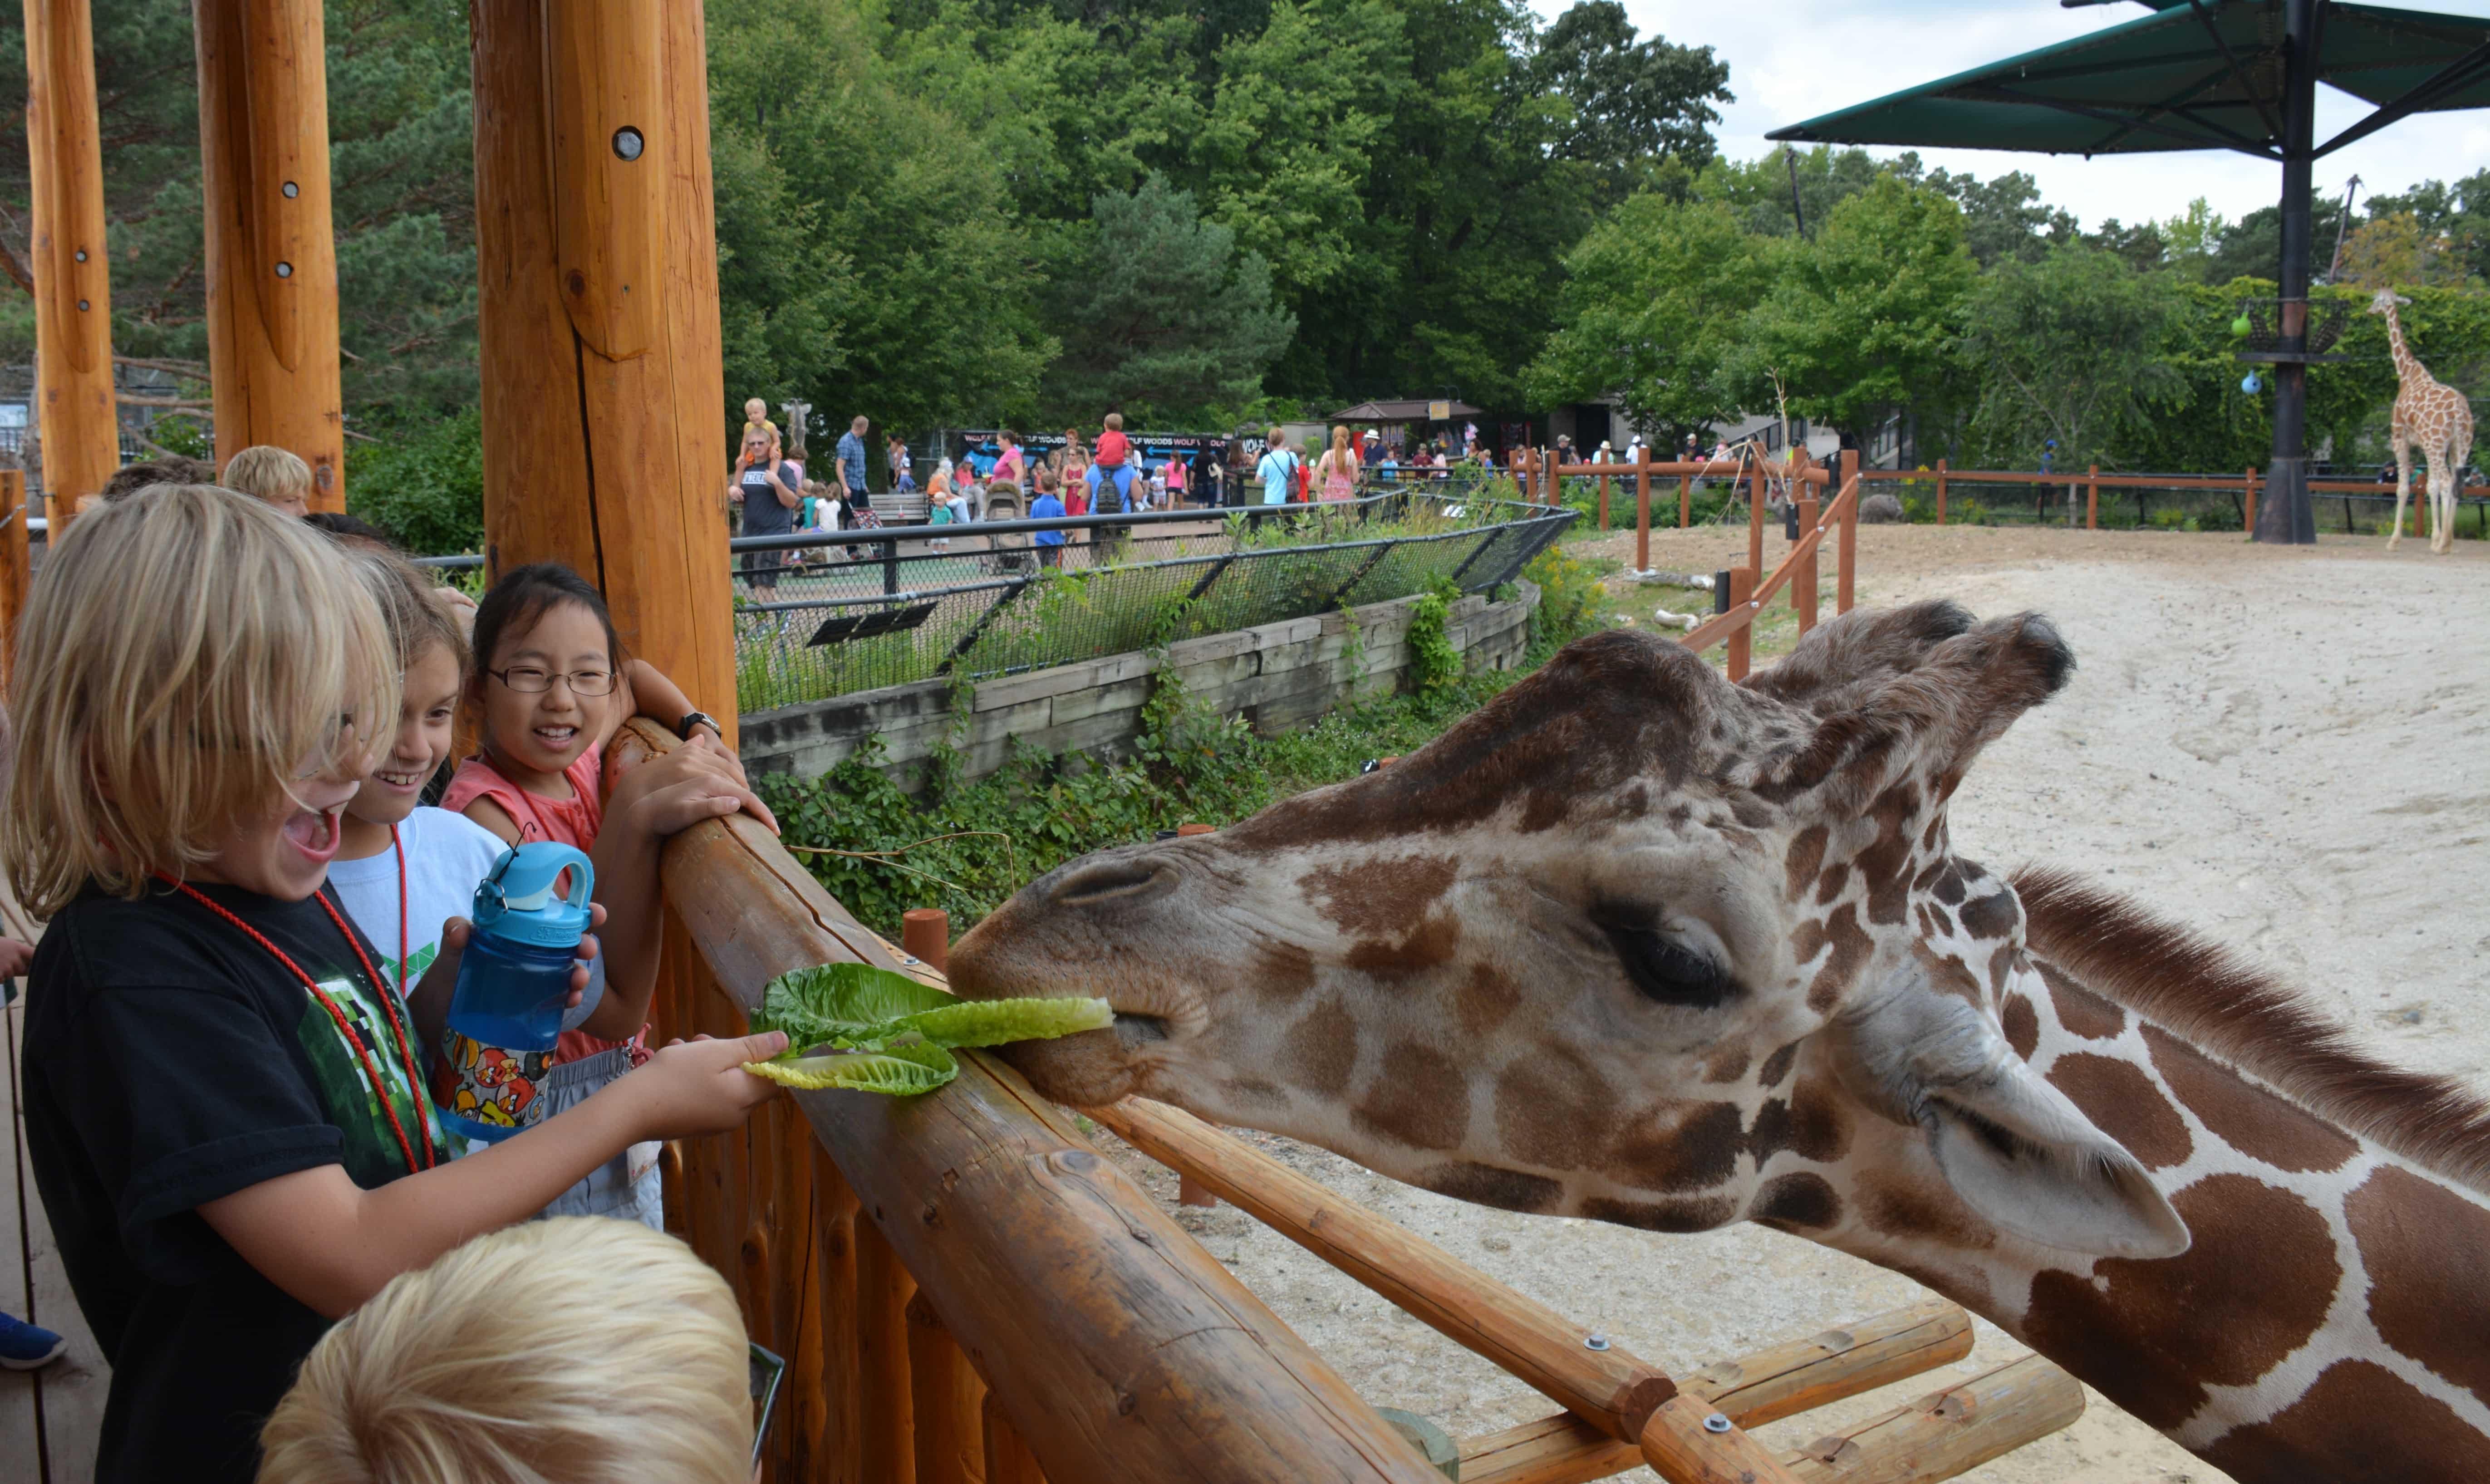 giraffe eating a leaf from a kids hand